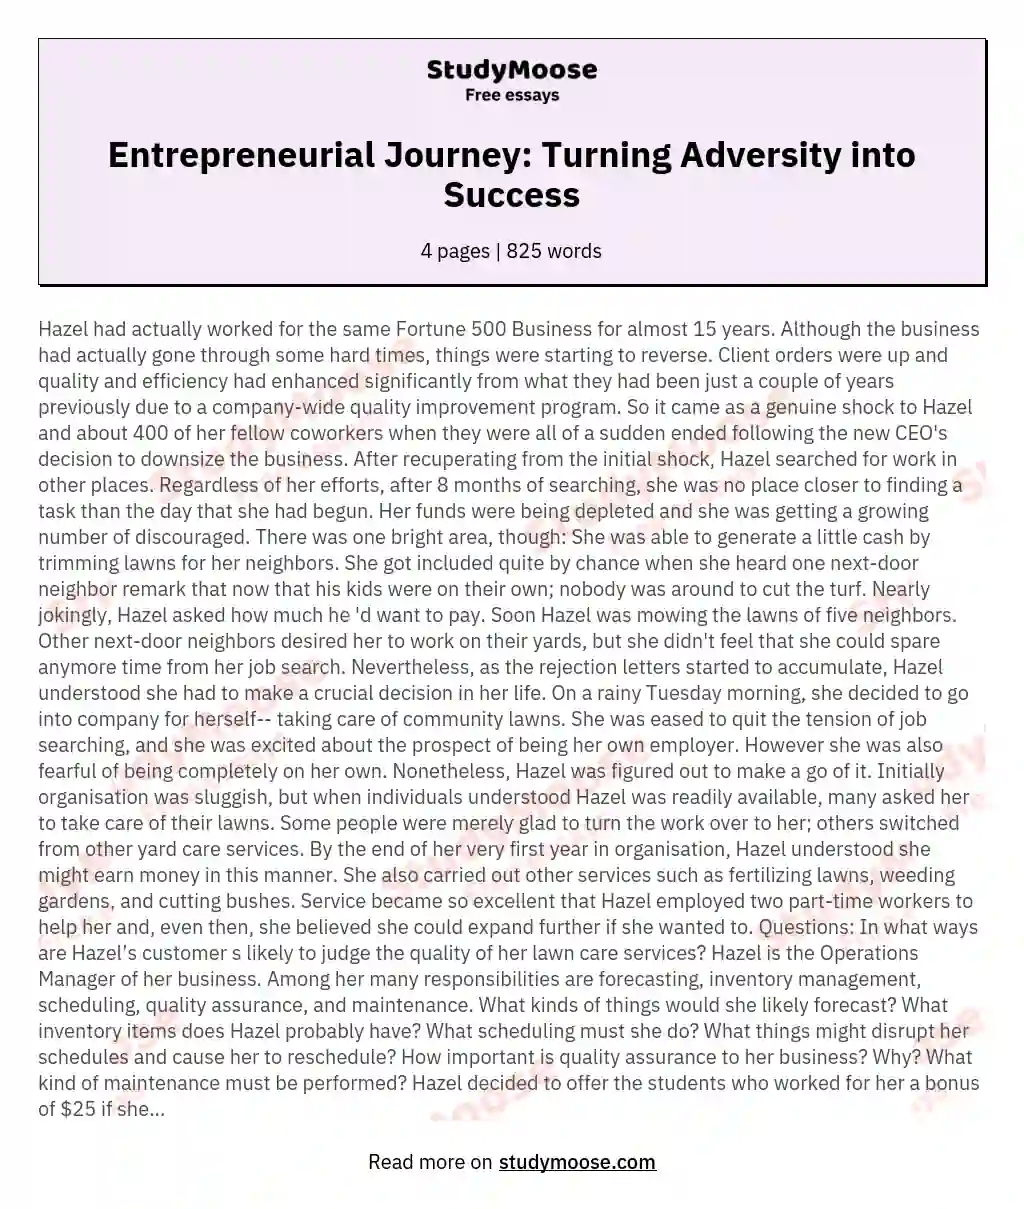 Entrepreneurial Journey: Turning Adversity into Success essay